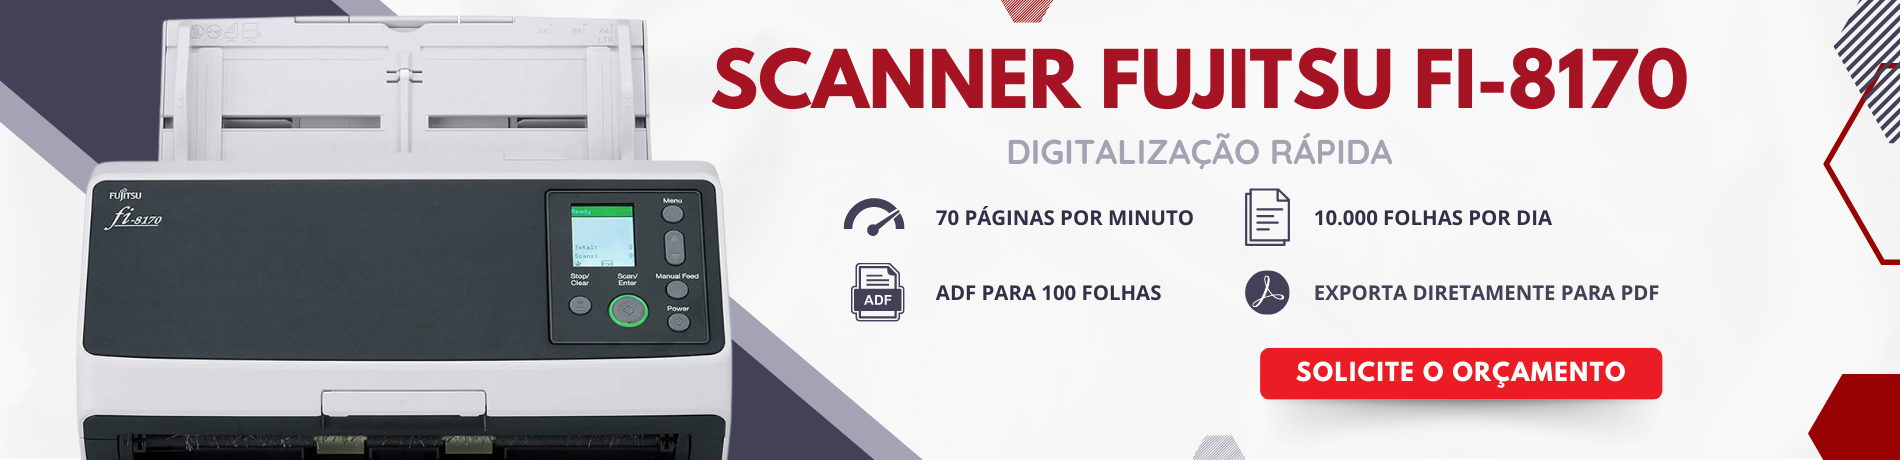 Banner- Scanner Fujitsu Fi-8170